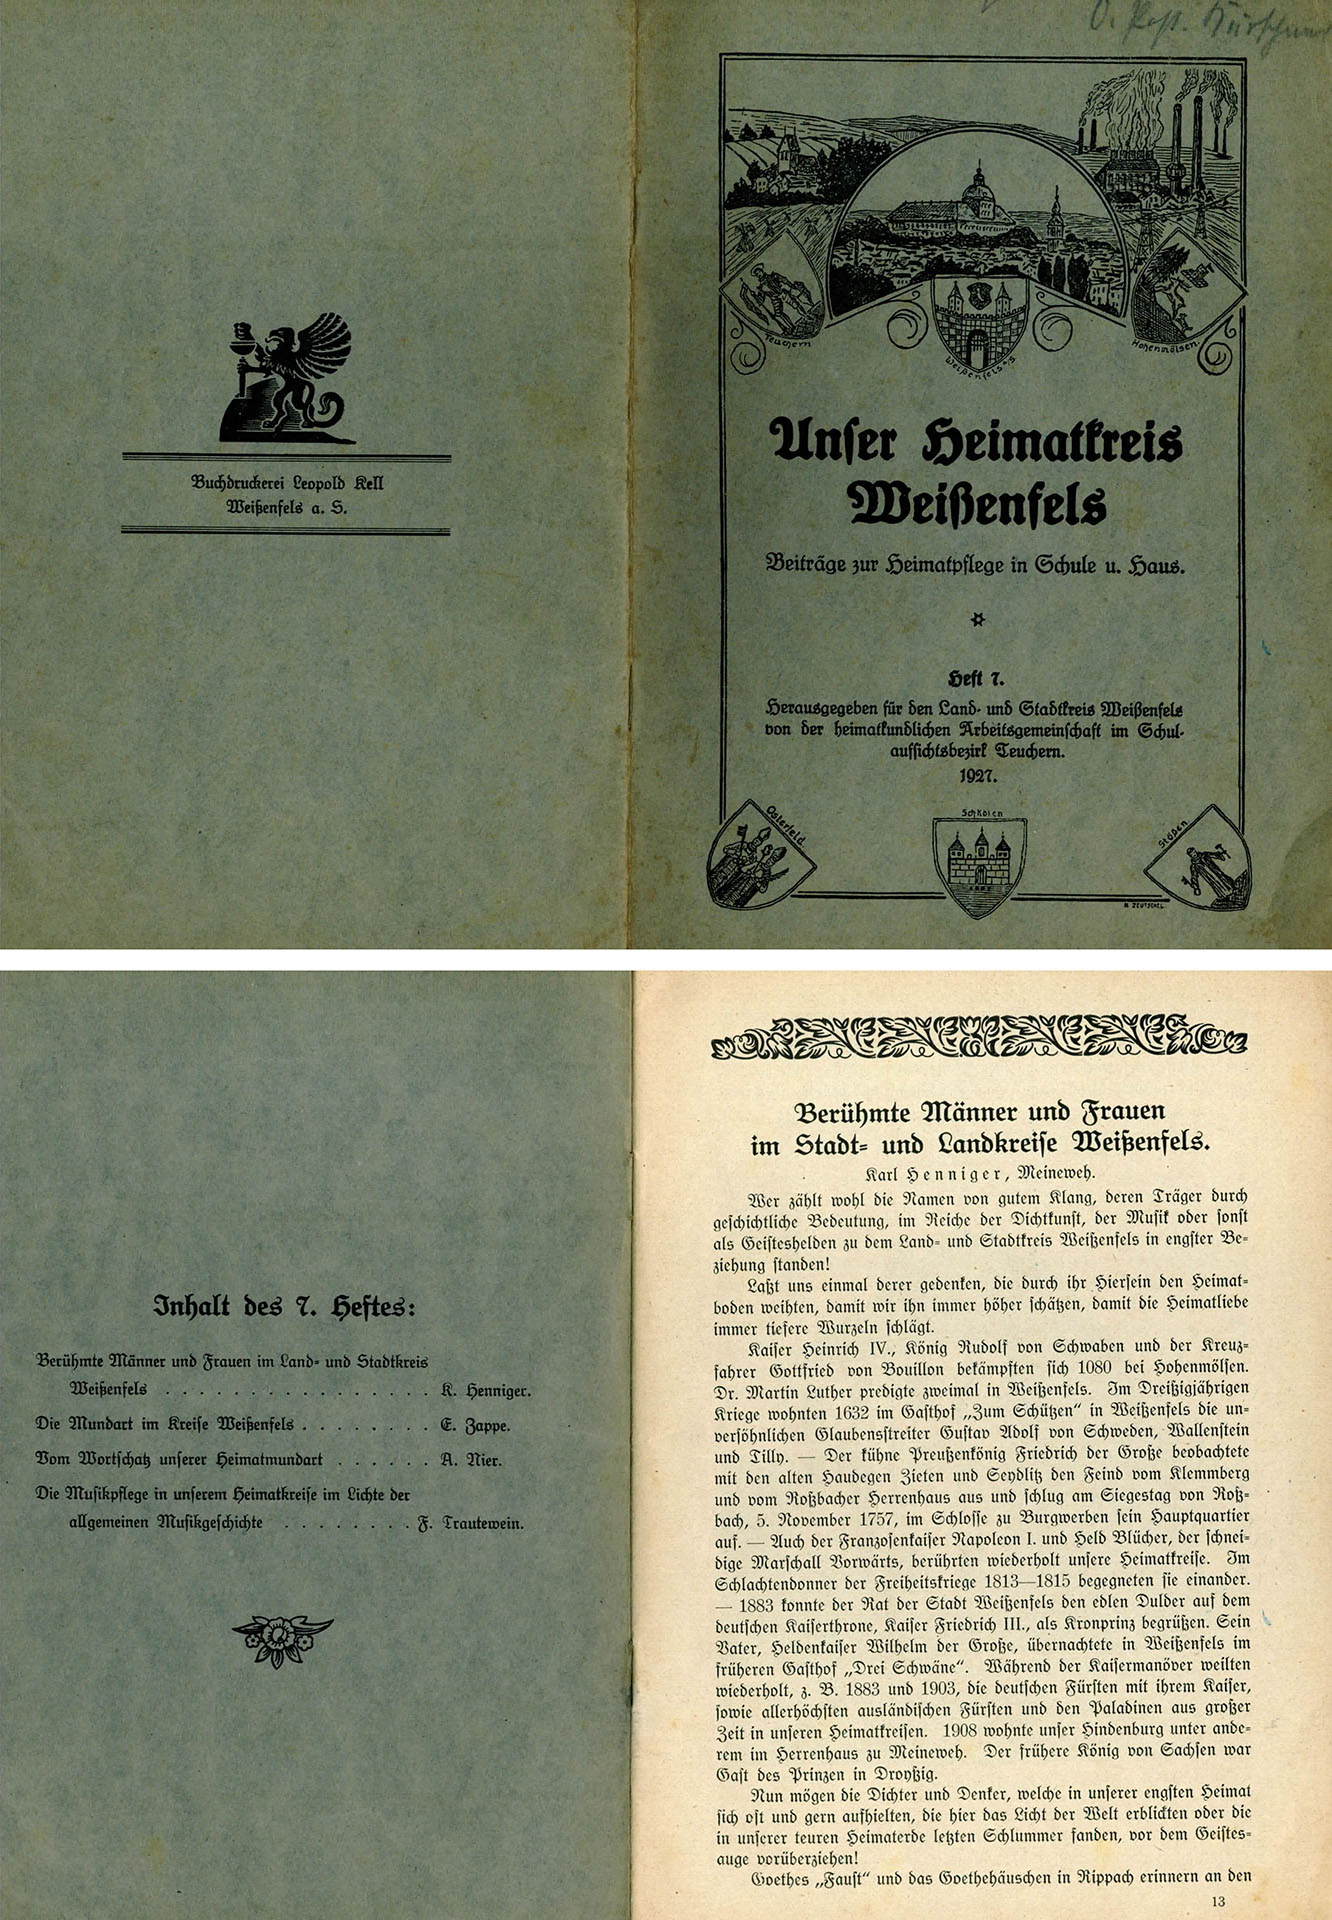 Unser Heimatkreis Weißenfels - Heft 7 / 1927 - Beiträge zur Heimatpflege - Land- und Stadtkreis Weißenfels